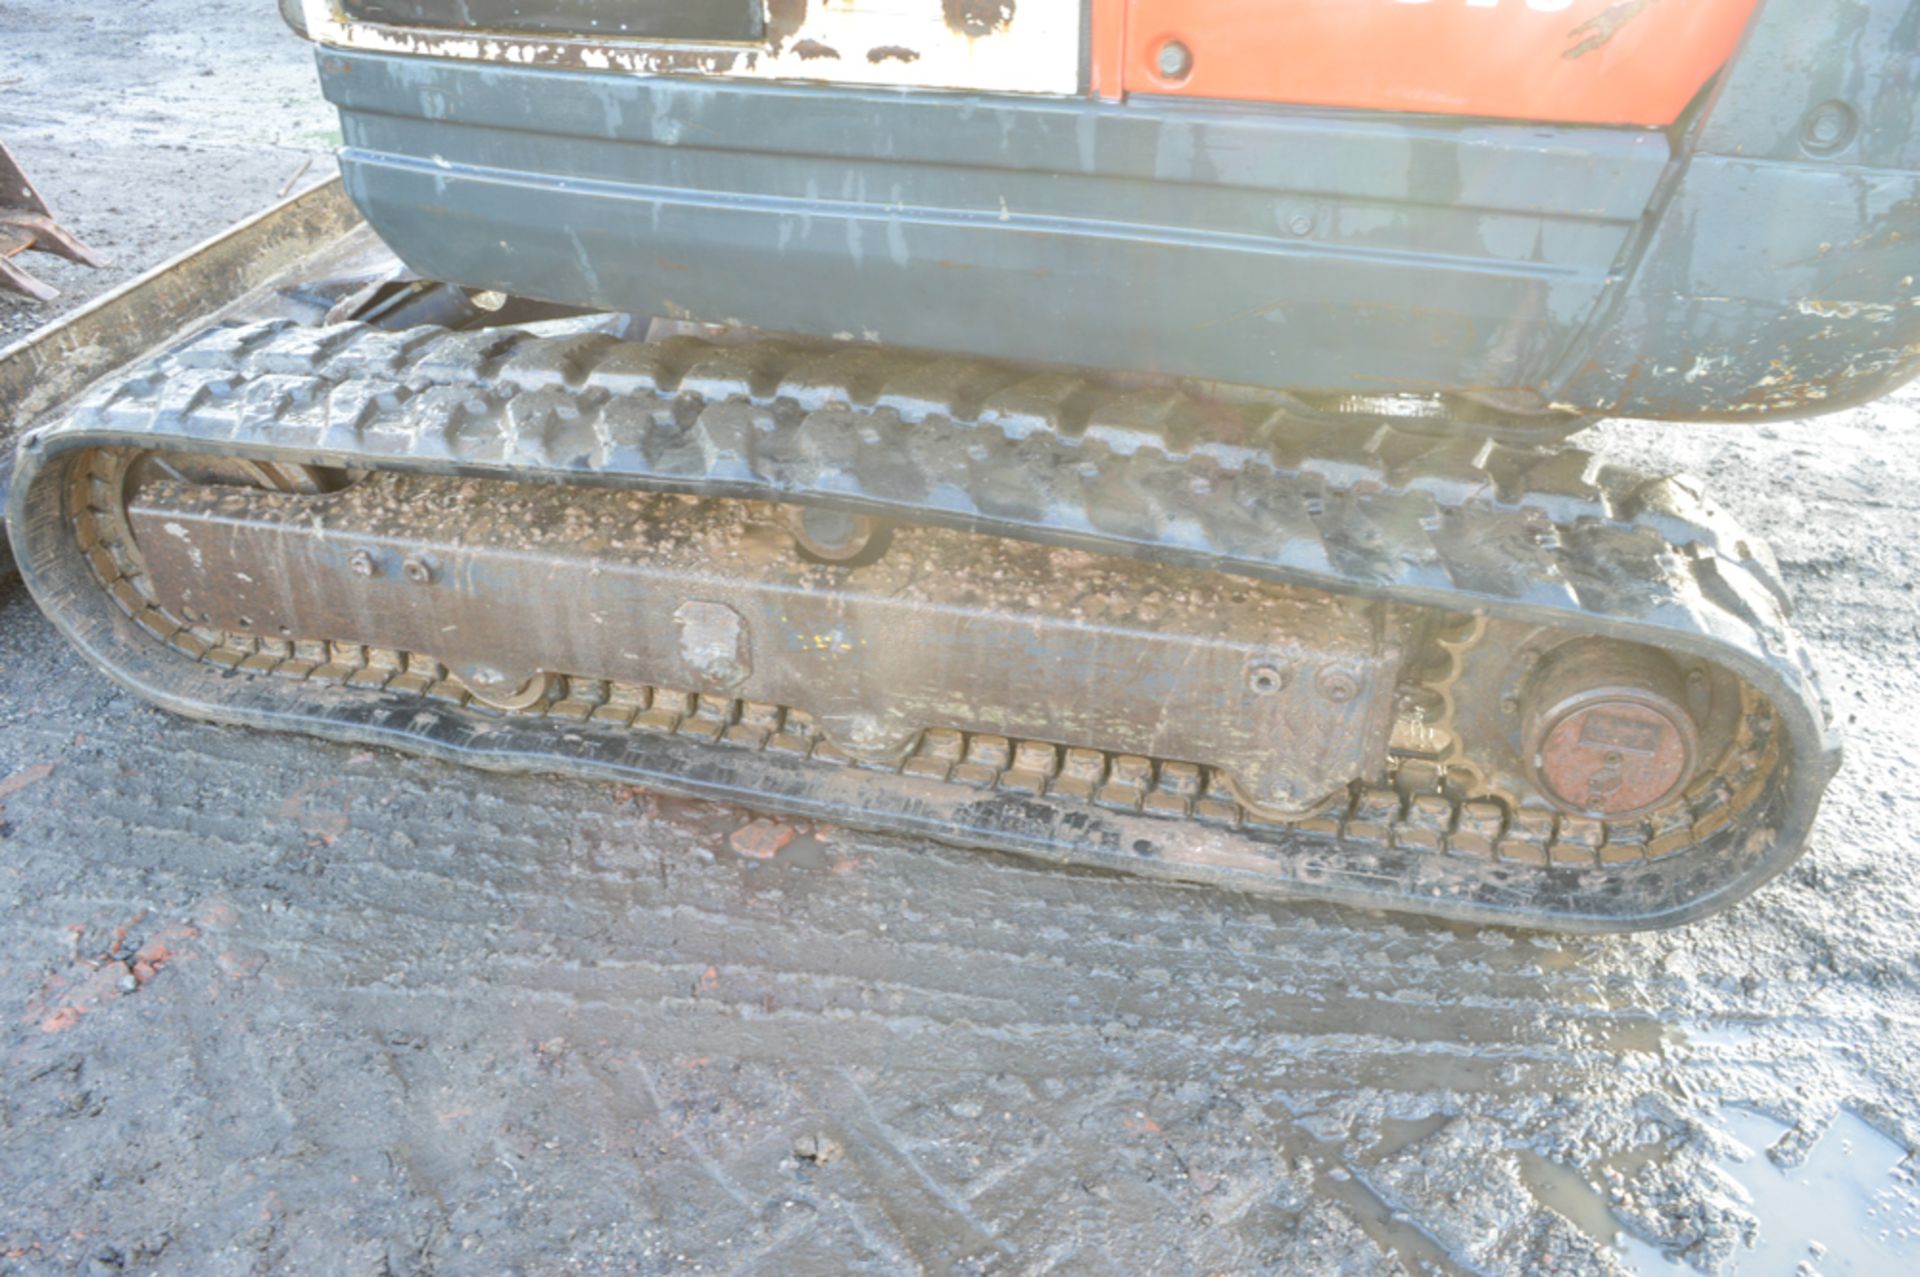 Kubota KX61-3 2.5 tonne rubber tracked mini excavator Year: 2010 S/N: 78234 Recorded Hours: 4696 - Image 8 of 11